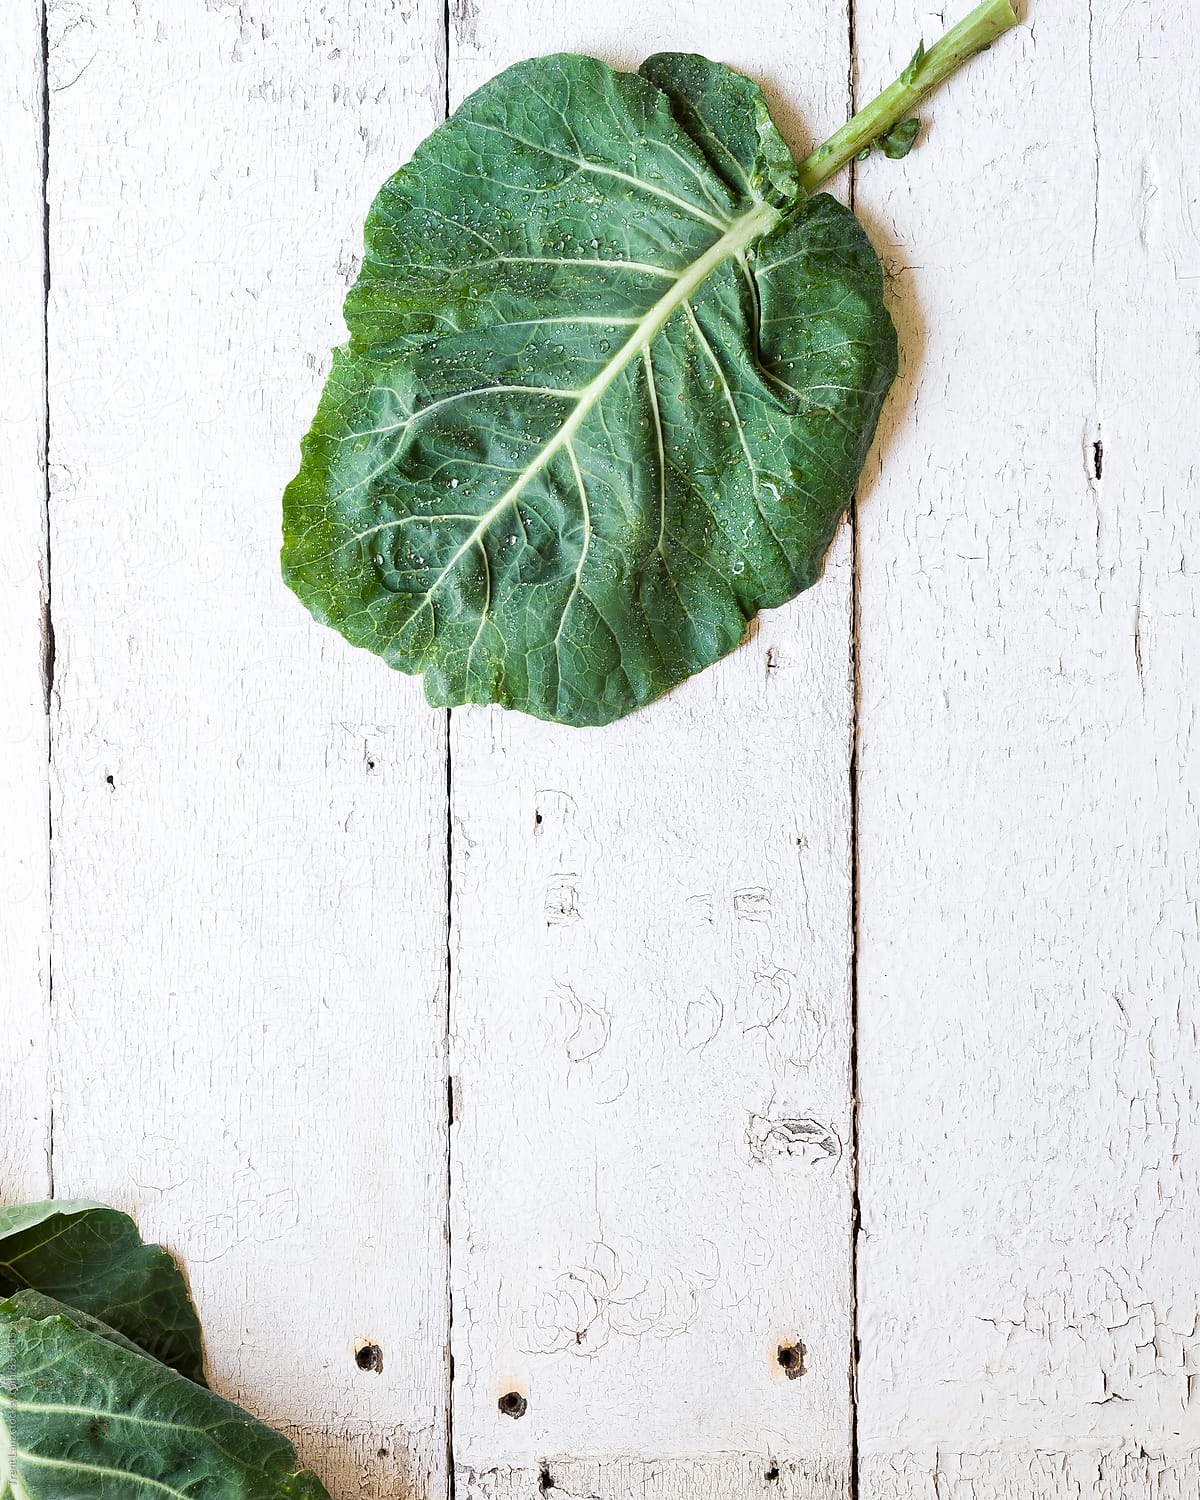 Leaf of Collard greens salad on shabby wooden background